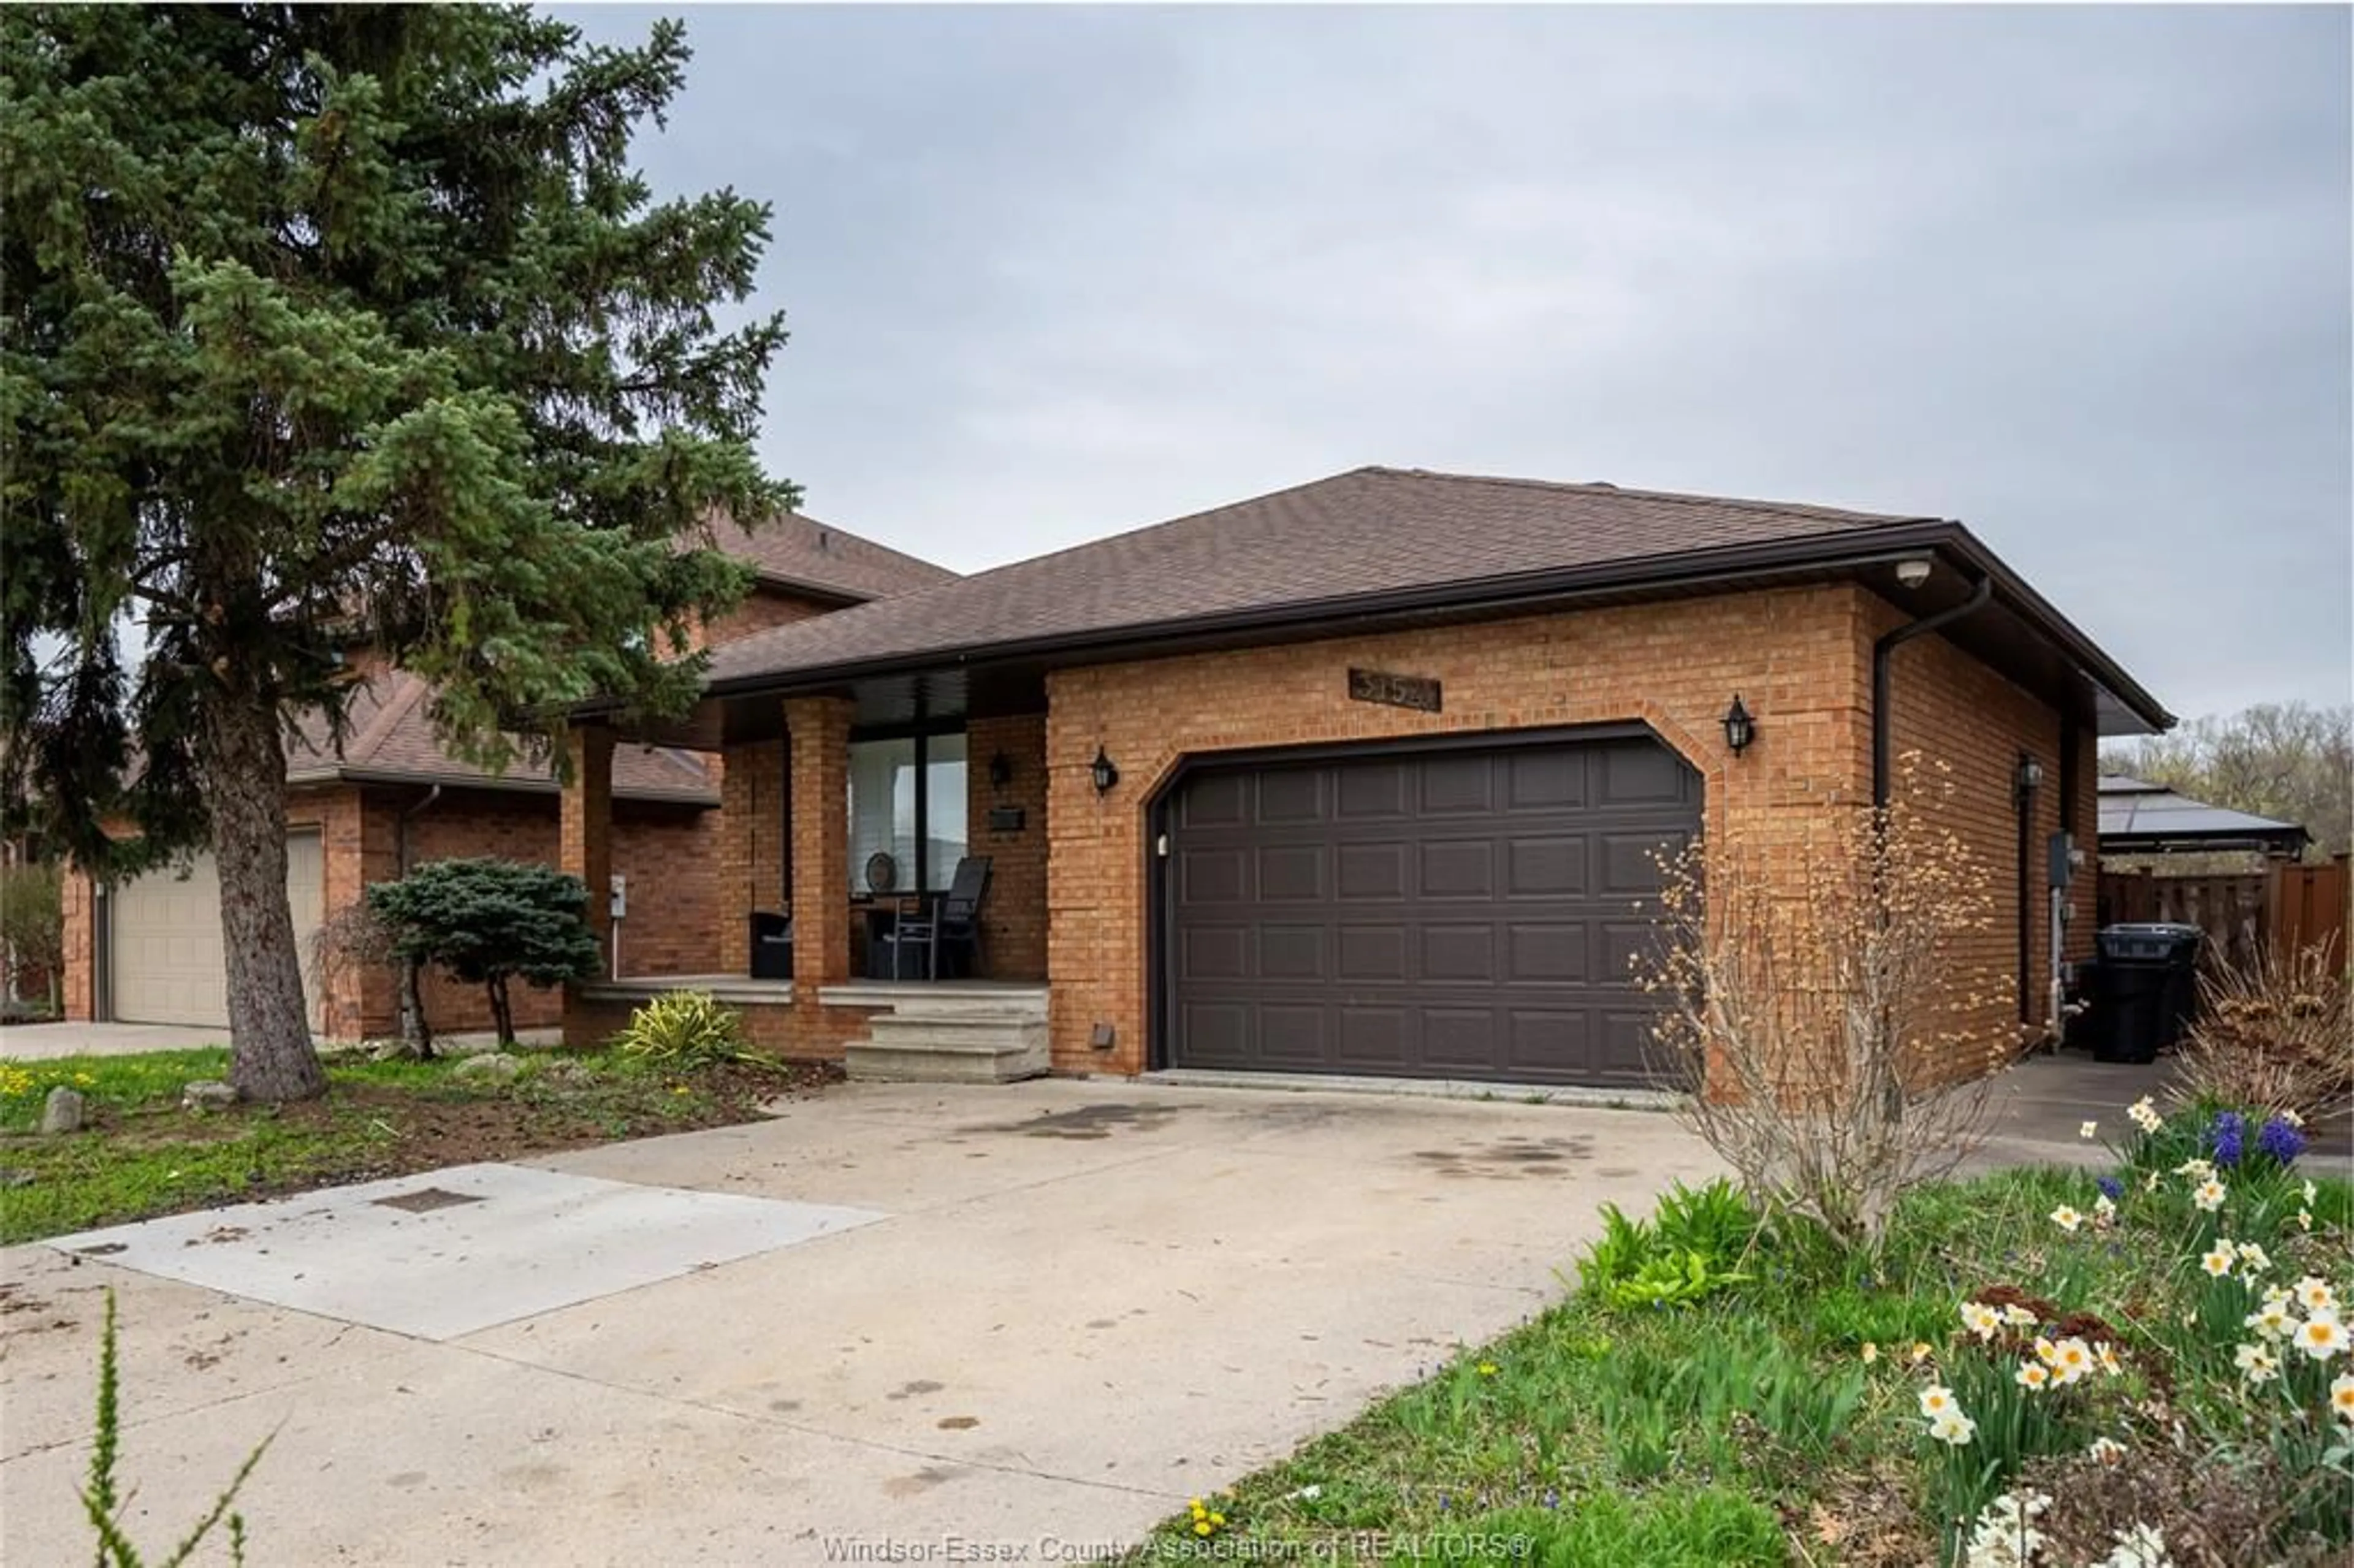 Home with brick exterior material for 3154 FAZIO Dr, Windsor Ontario N9E 4G6